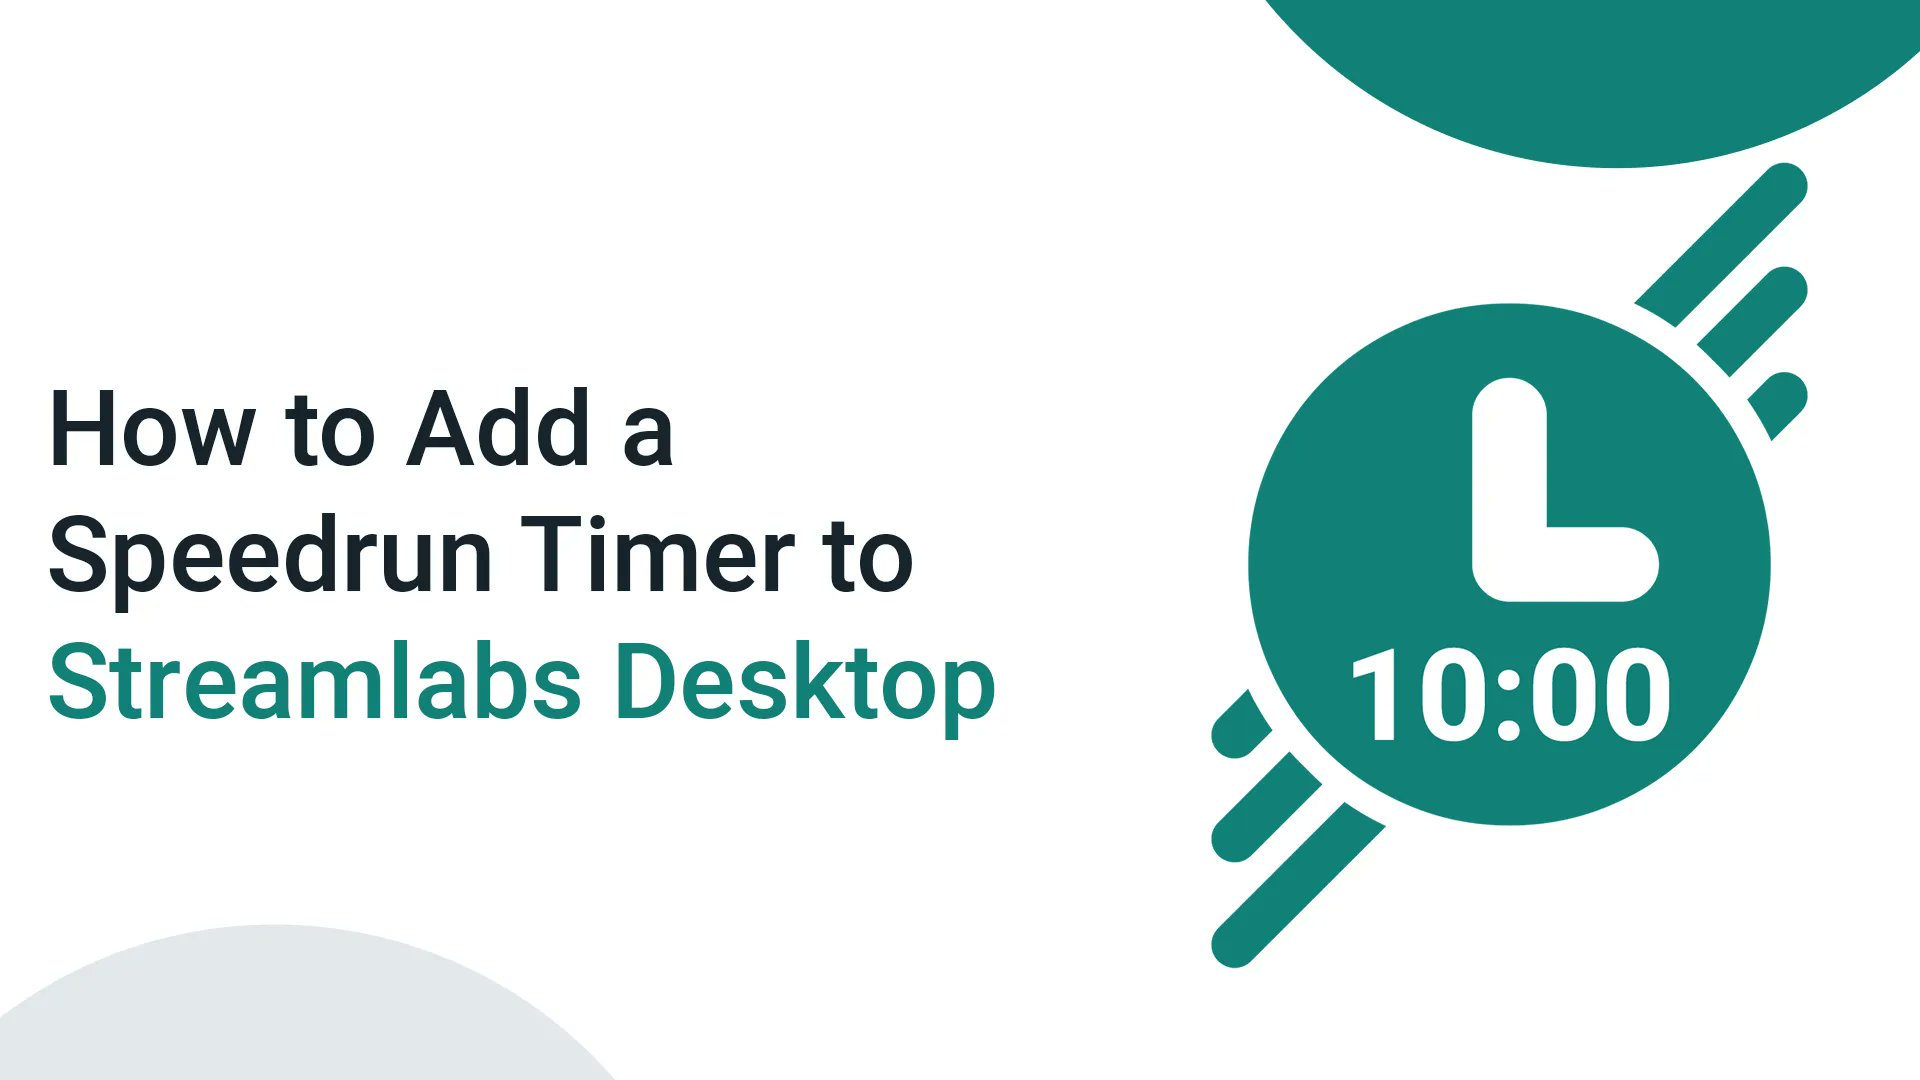 How to Add a Speedrun Timer to Streamlabs Desktop